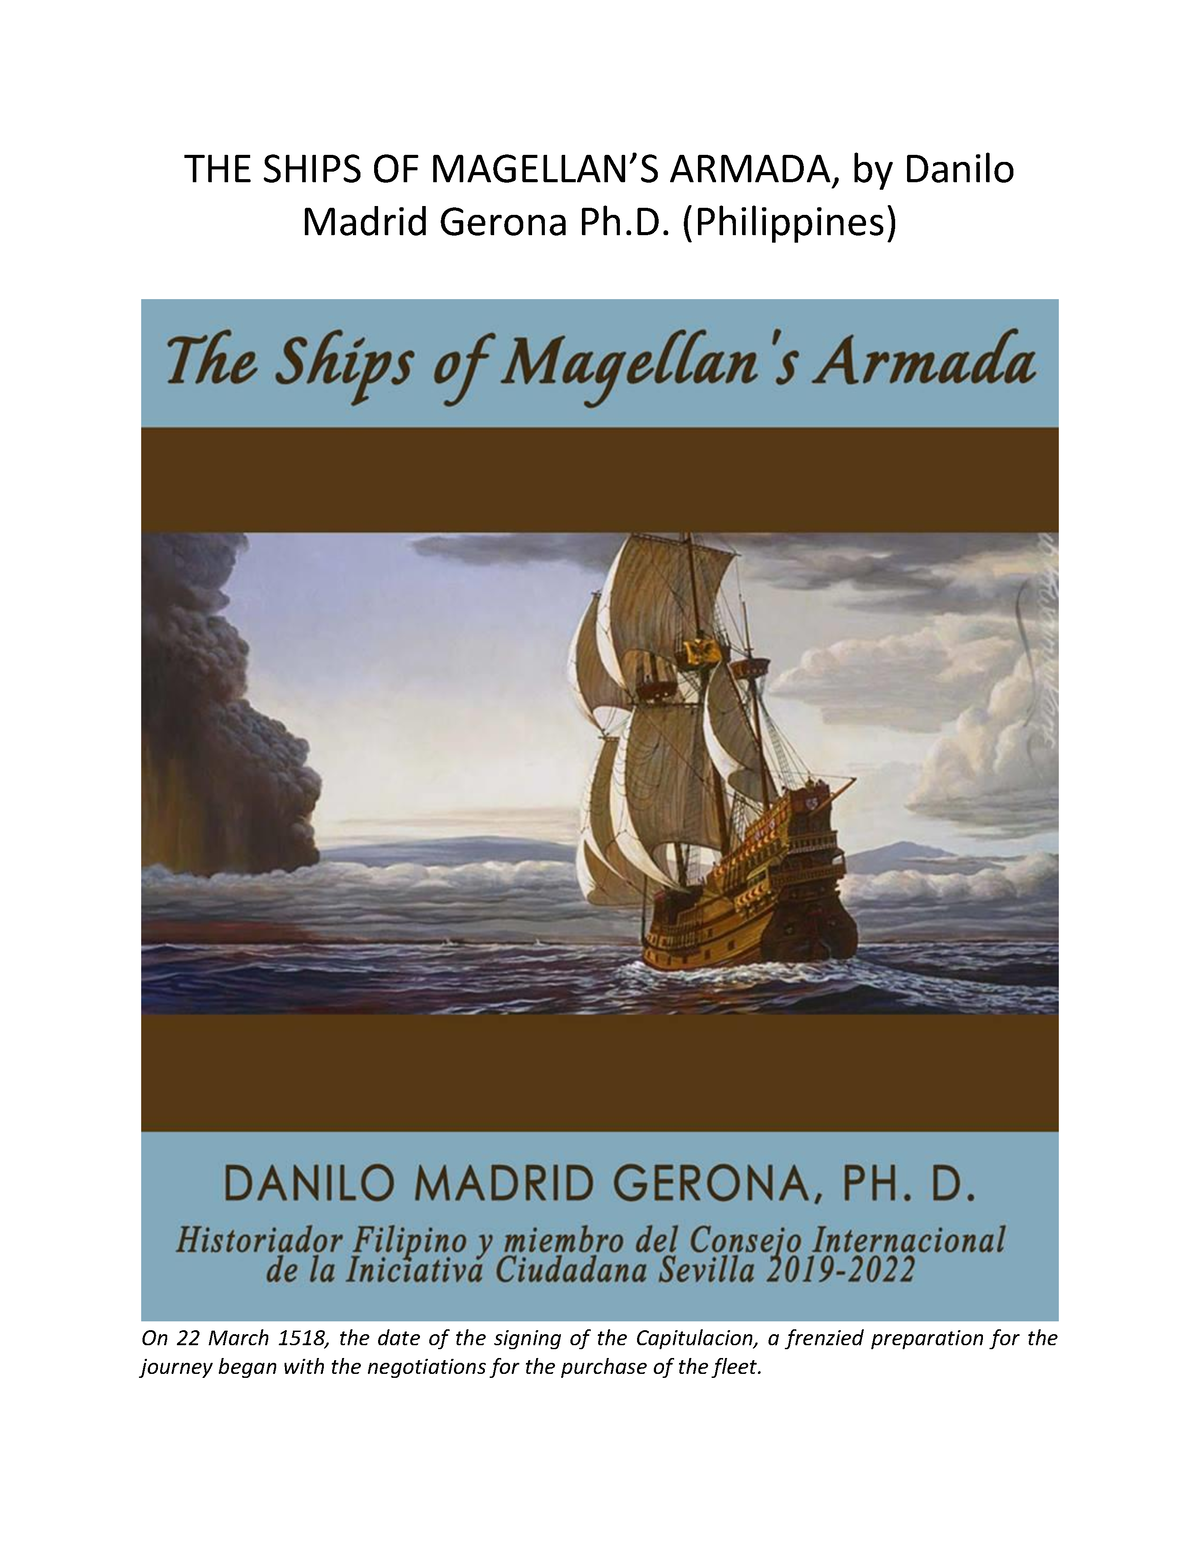 Magellan's Ship, Trinidad, Sails into Fernandina - 